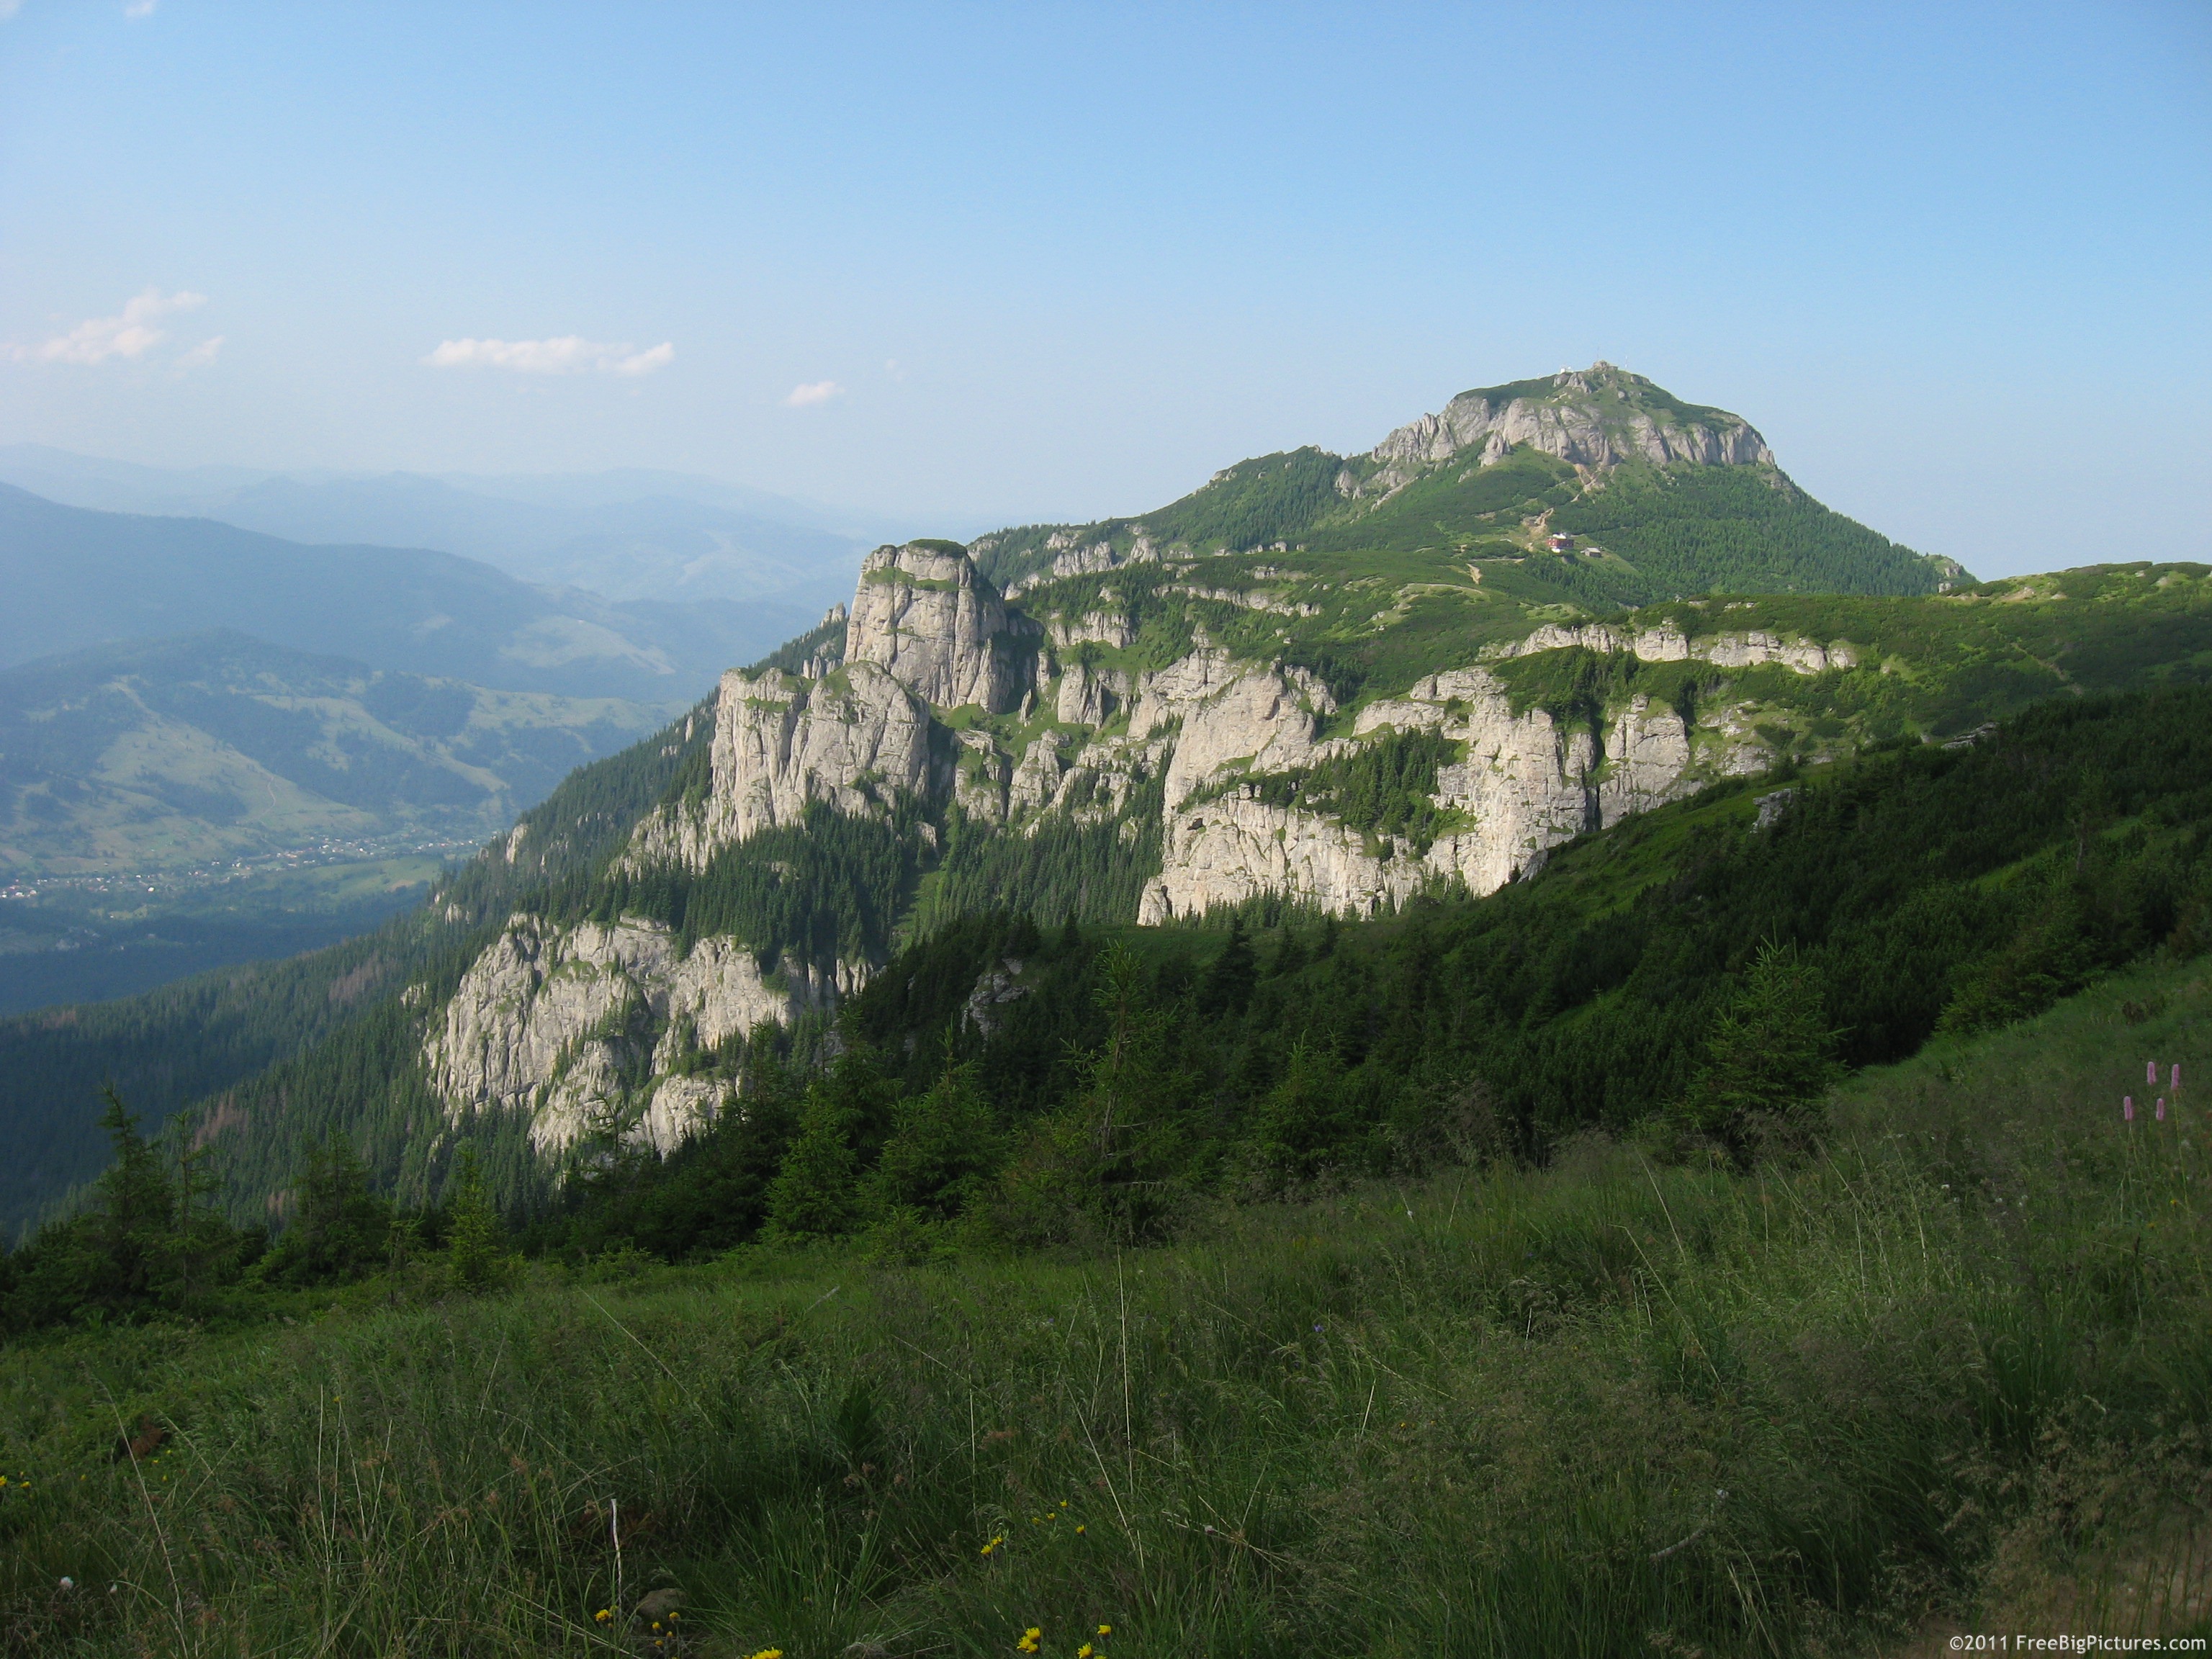 Ceahlau massif with Piatra Ciobanului and Toaca peak